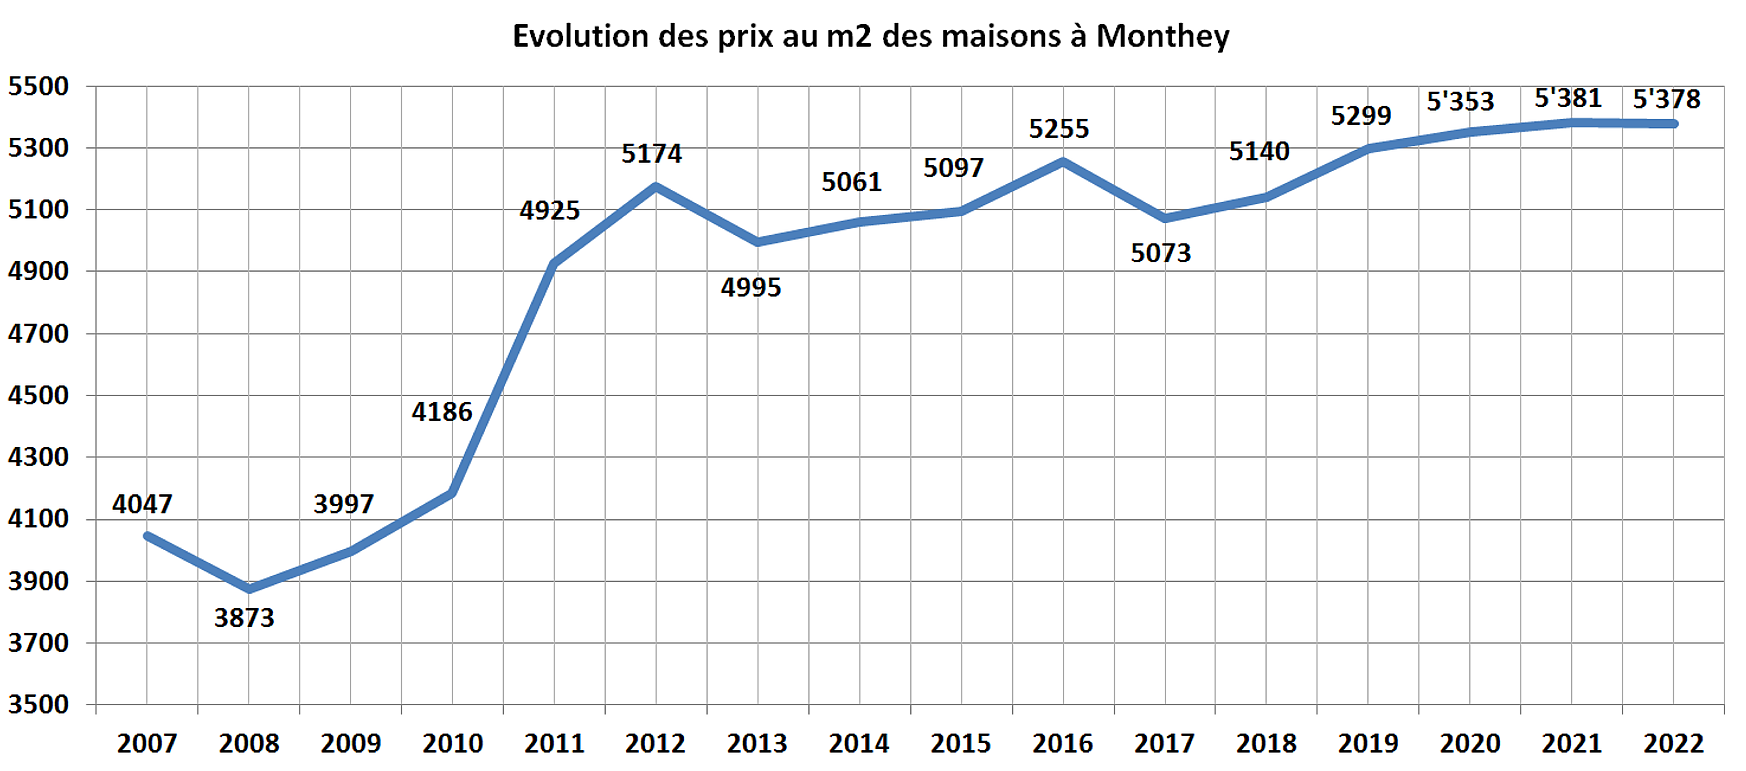 evolution prix m2 maison monthey 2022